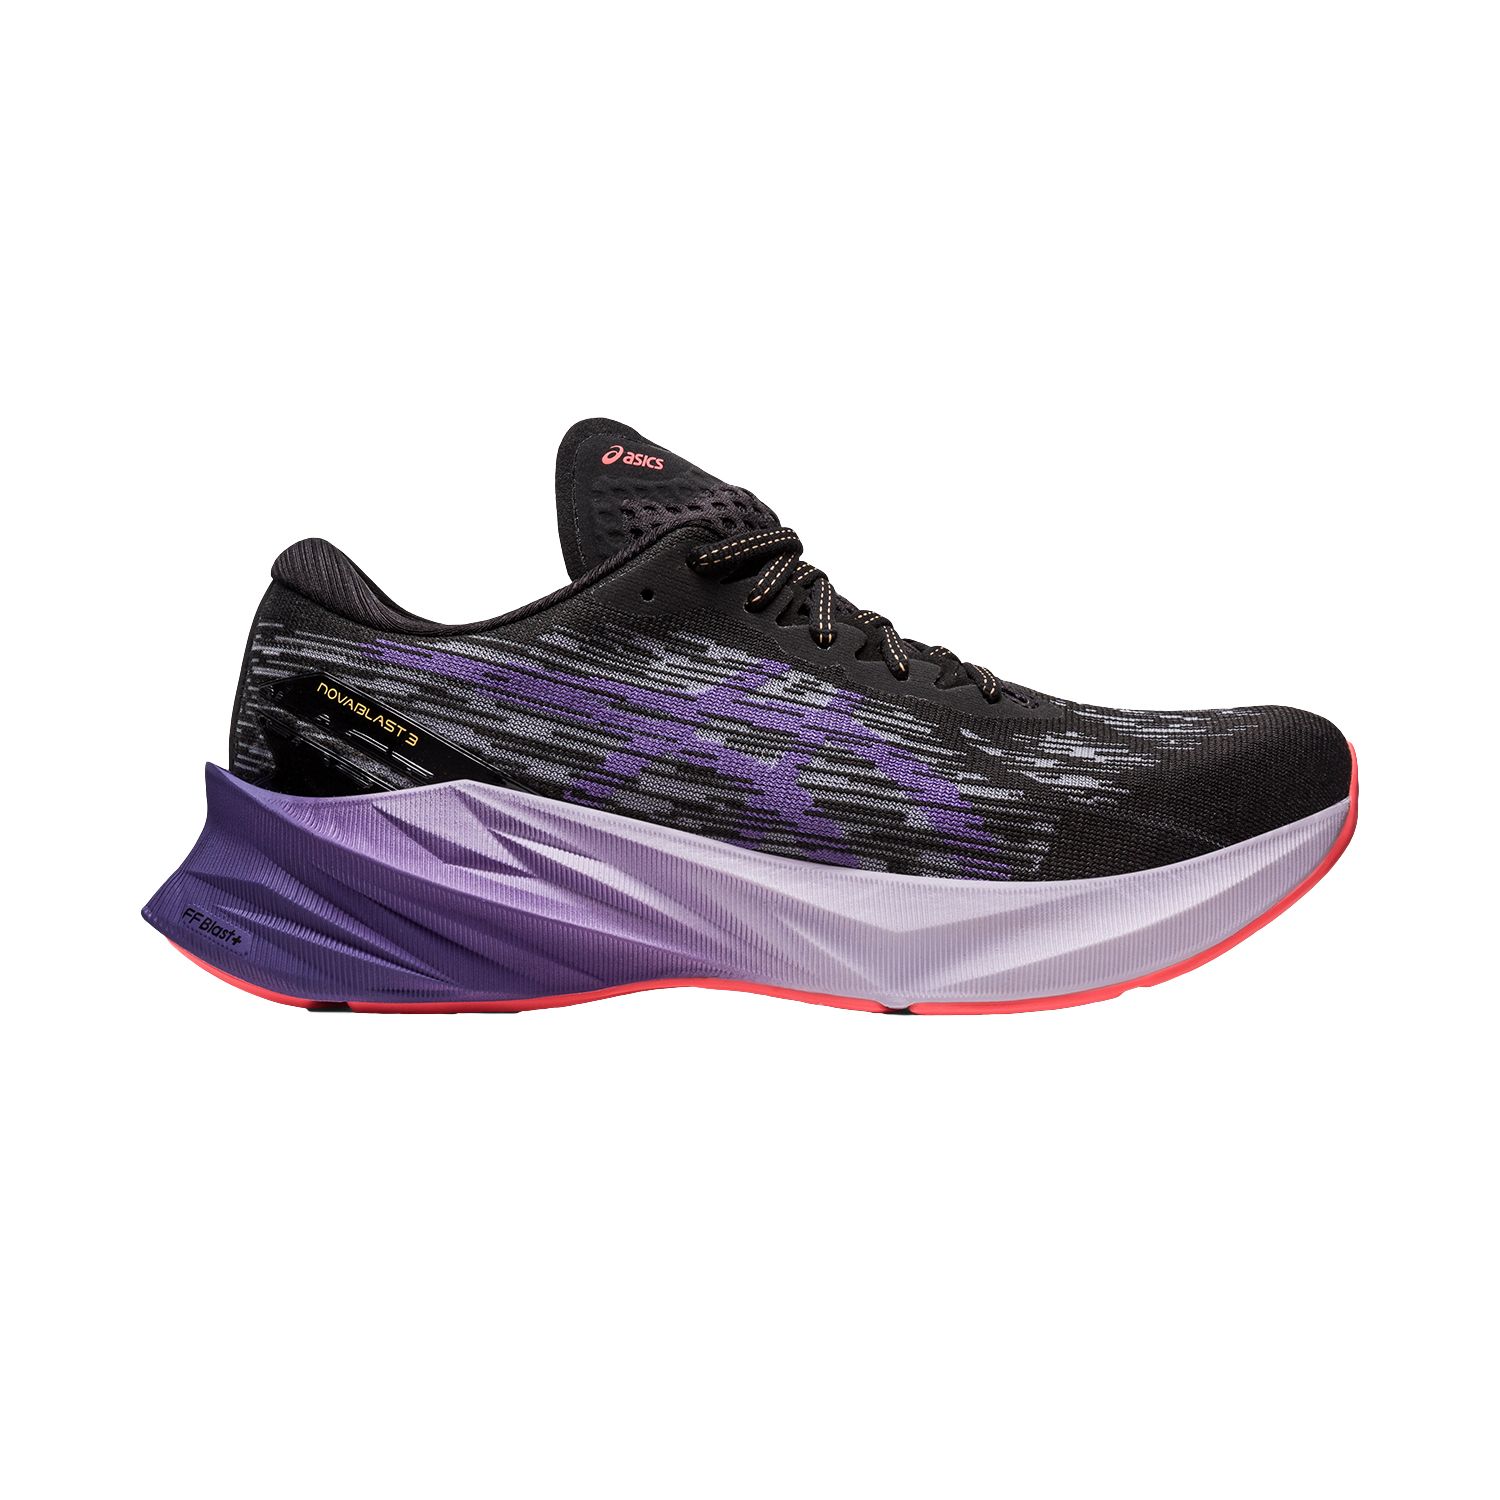 Asics Novablast 3 Women's Running Shoes - Black/Dusty Purple